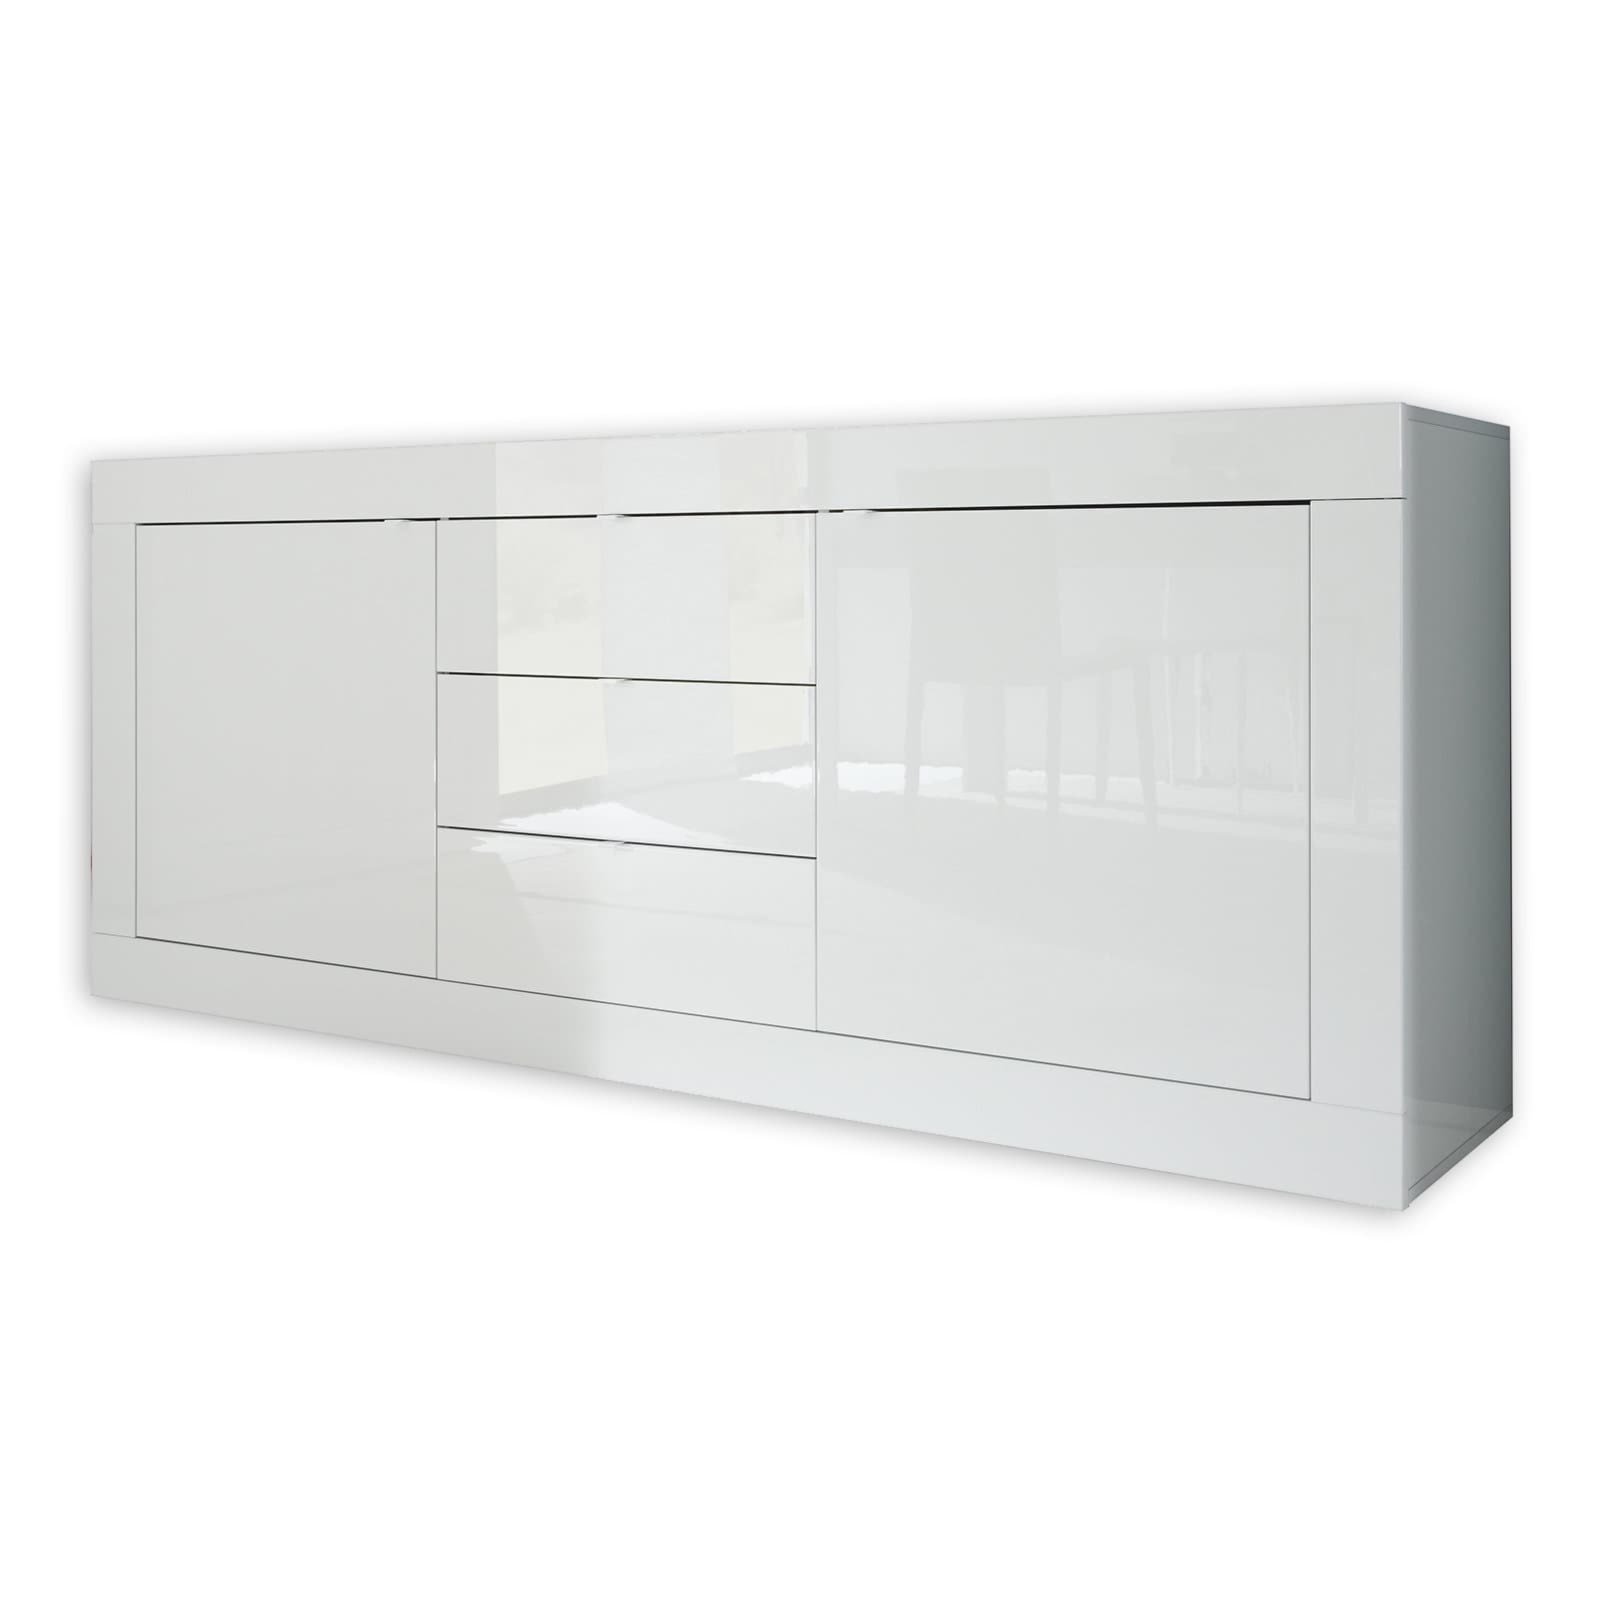 Sideboard BASIC - weiß Hochglanz - 210 cm breit | eBay